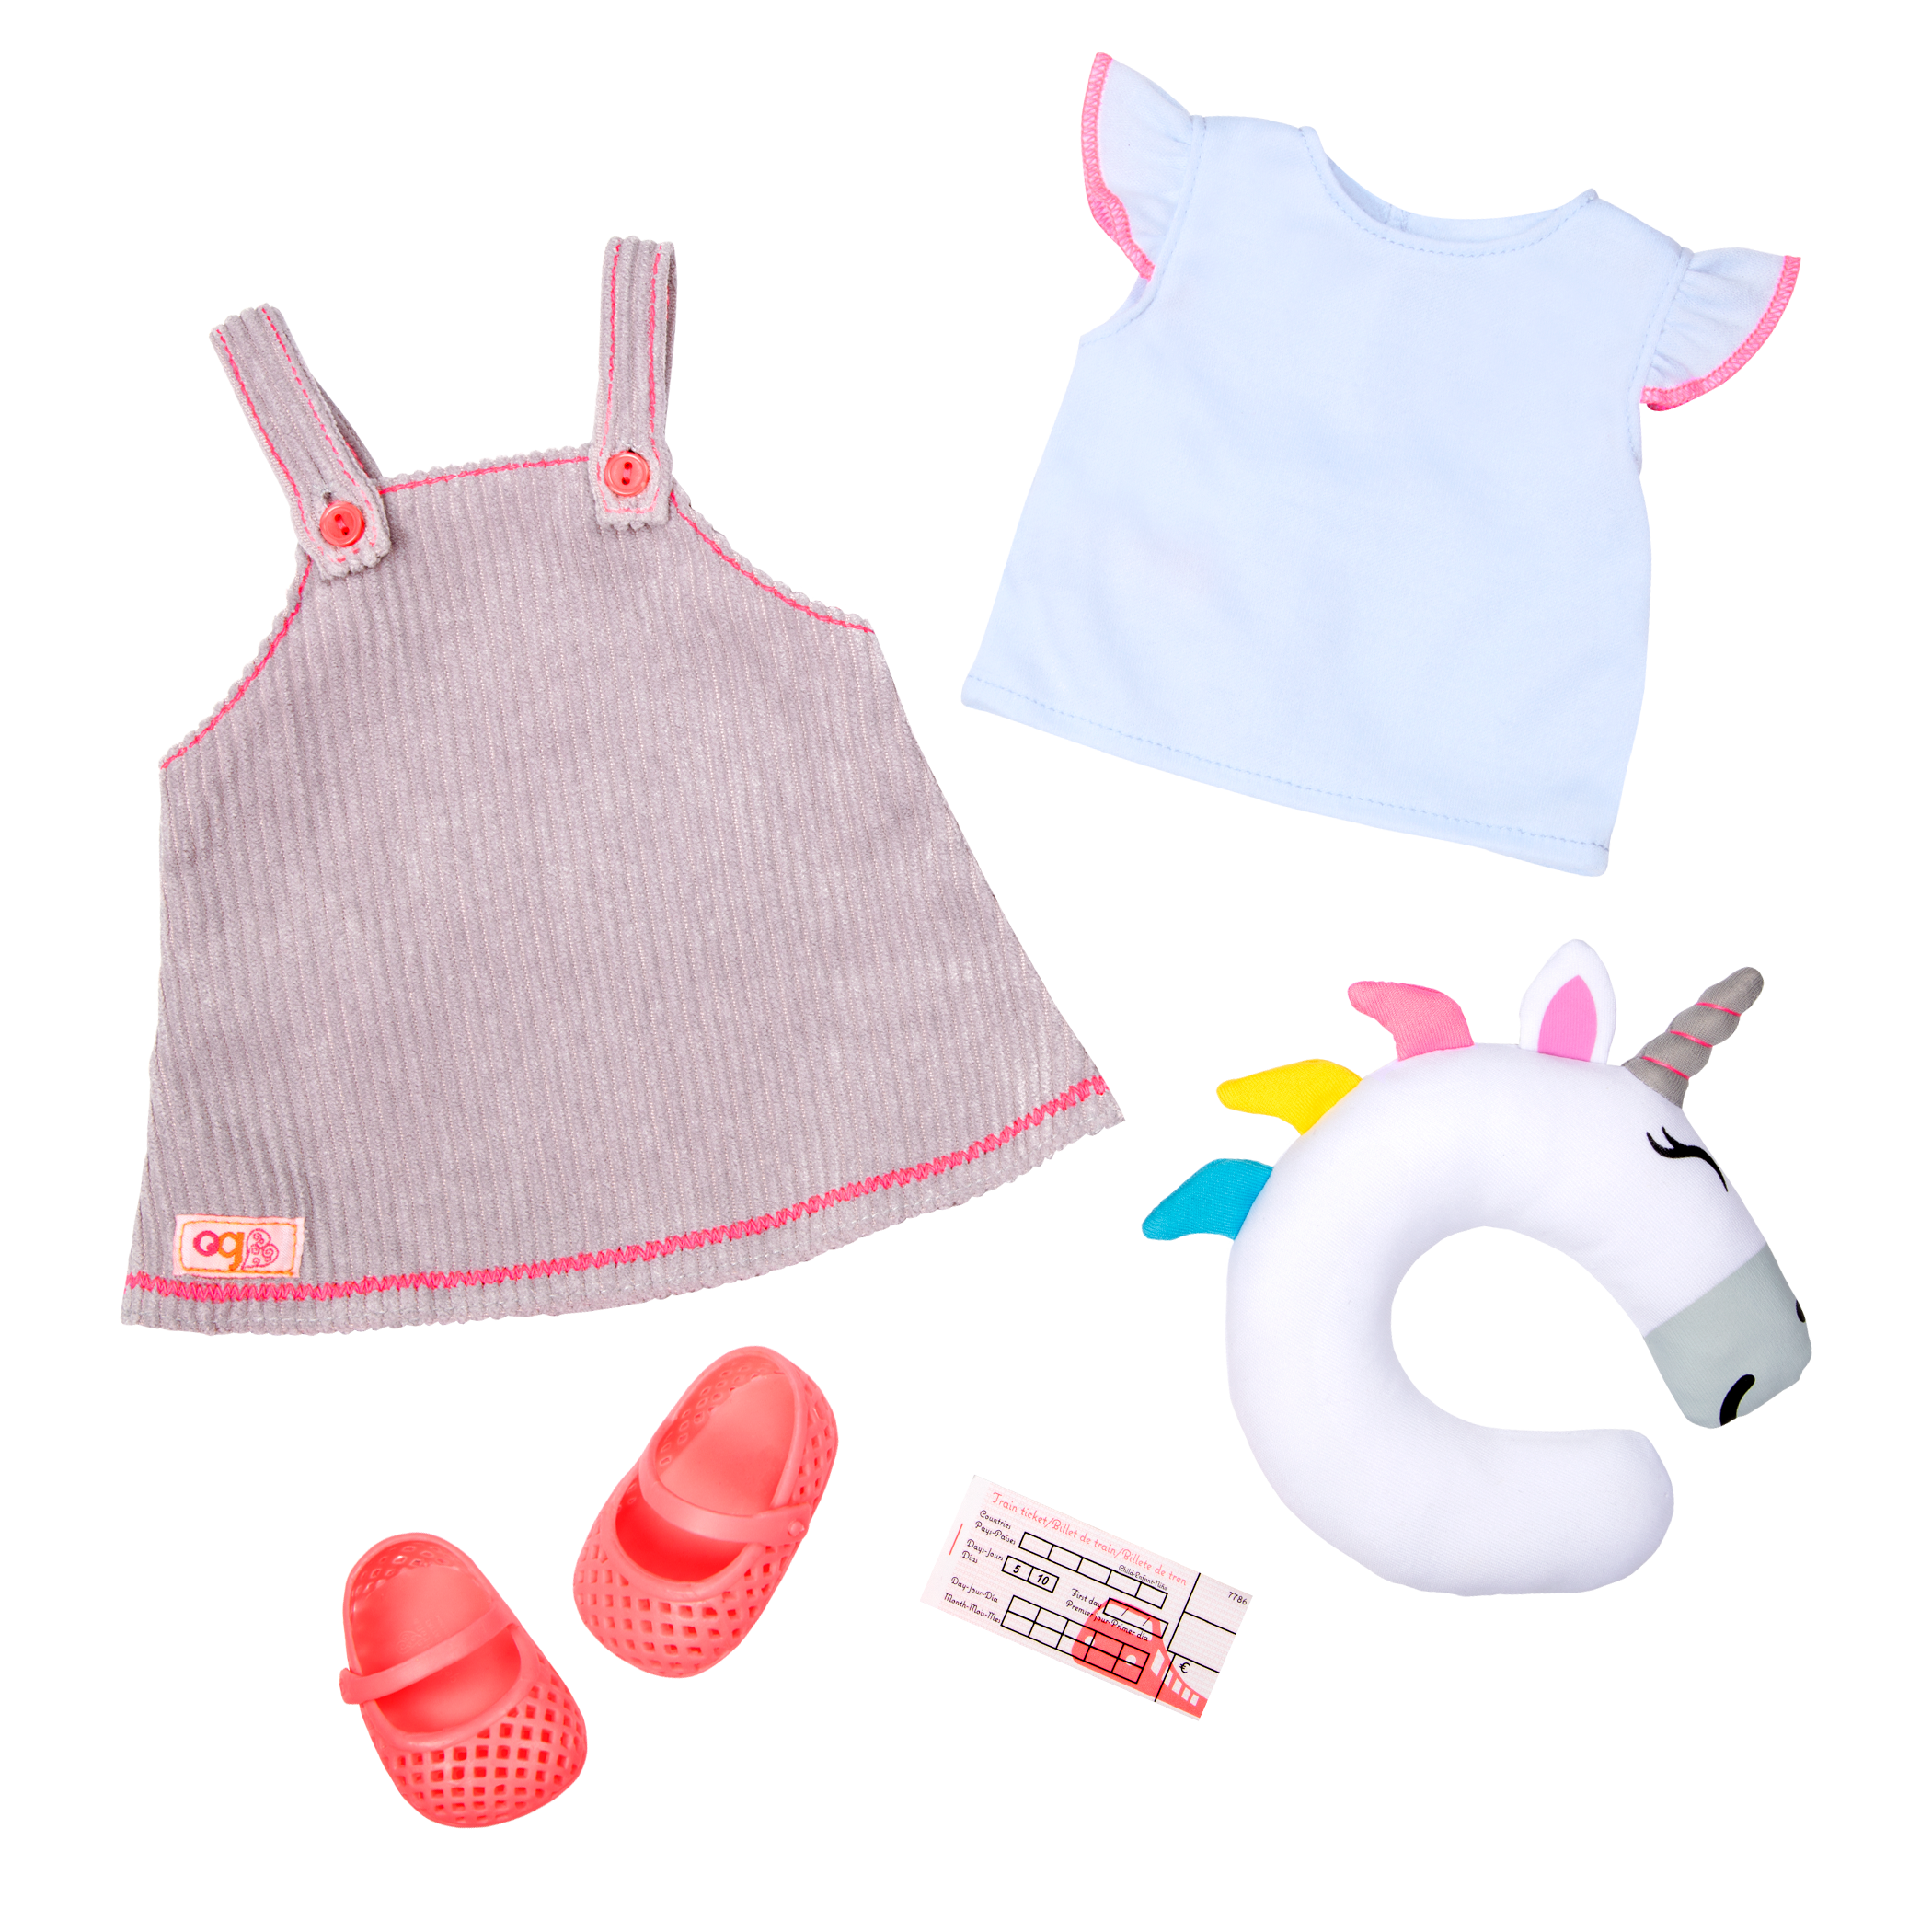 Unicorn Express - Outfit per bambola di 46 cm;Unicorn Express - Outfit per bambola di 46 cm;Unicorn Express - Outfit per bambola di 46 cm